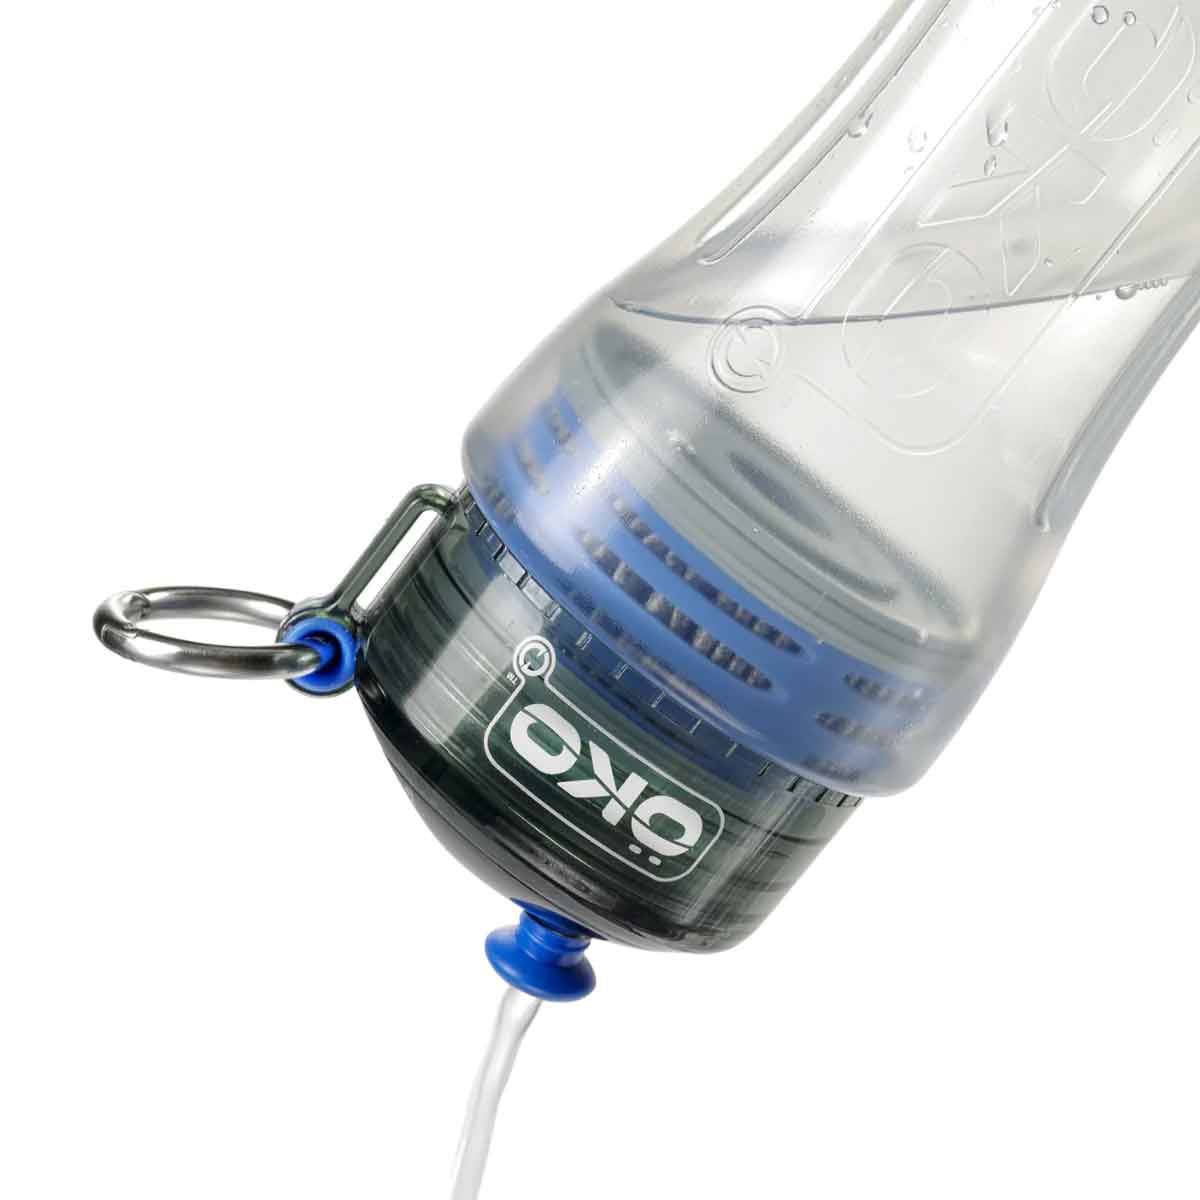 Botella filtrante ÖKO - 650 ml